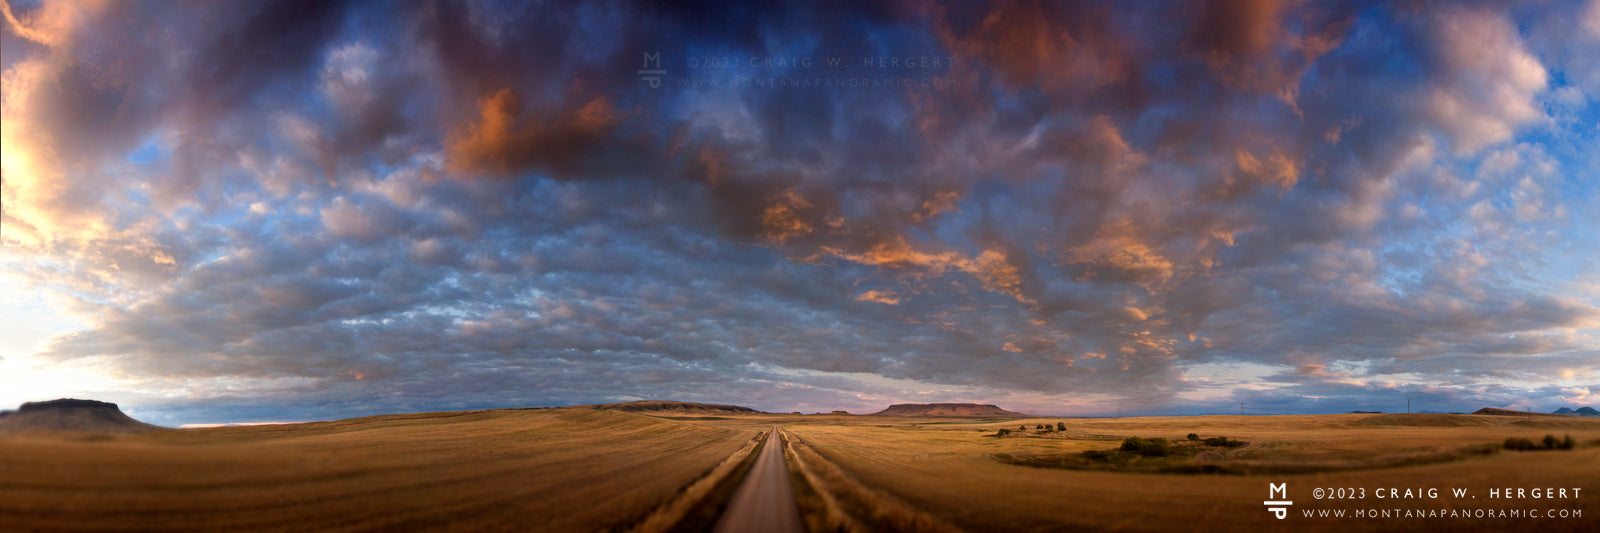 "Sun River Road Sunset" - Simms, Montana